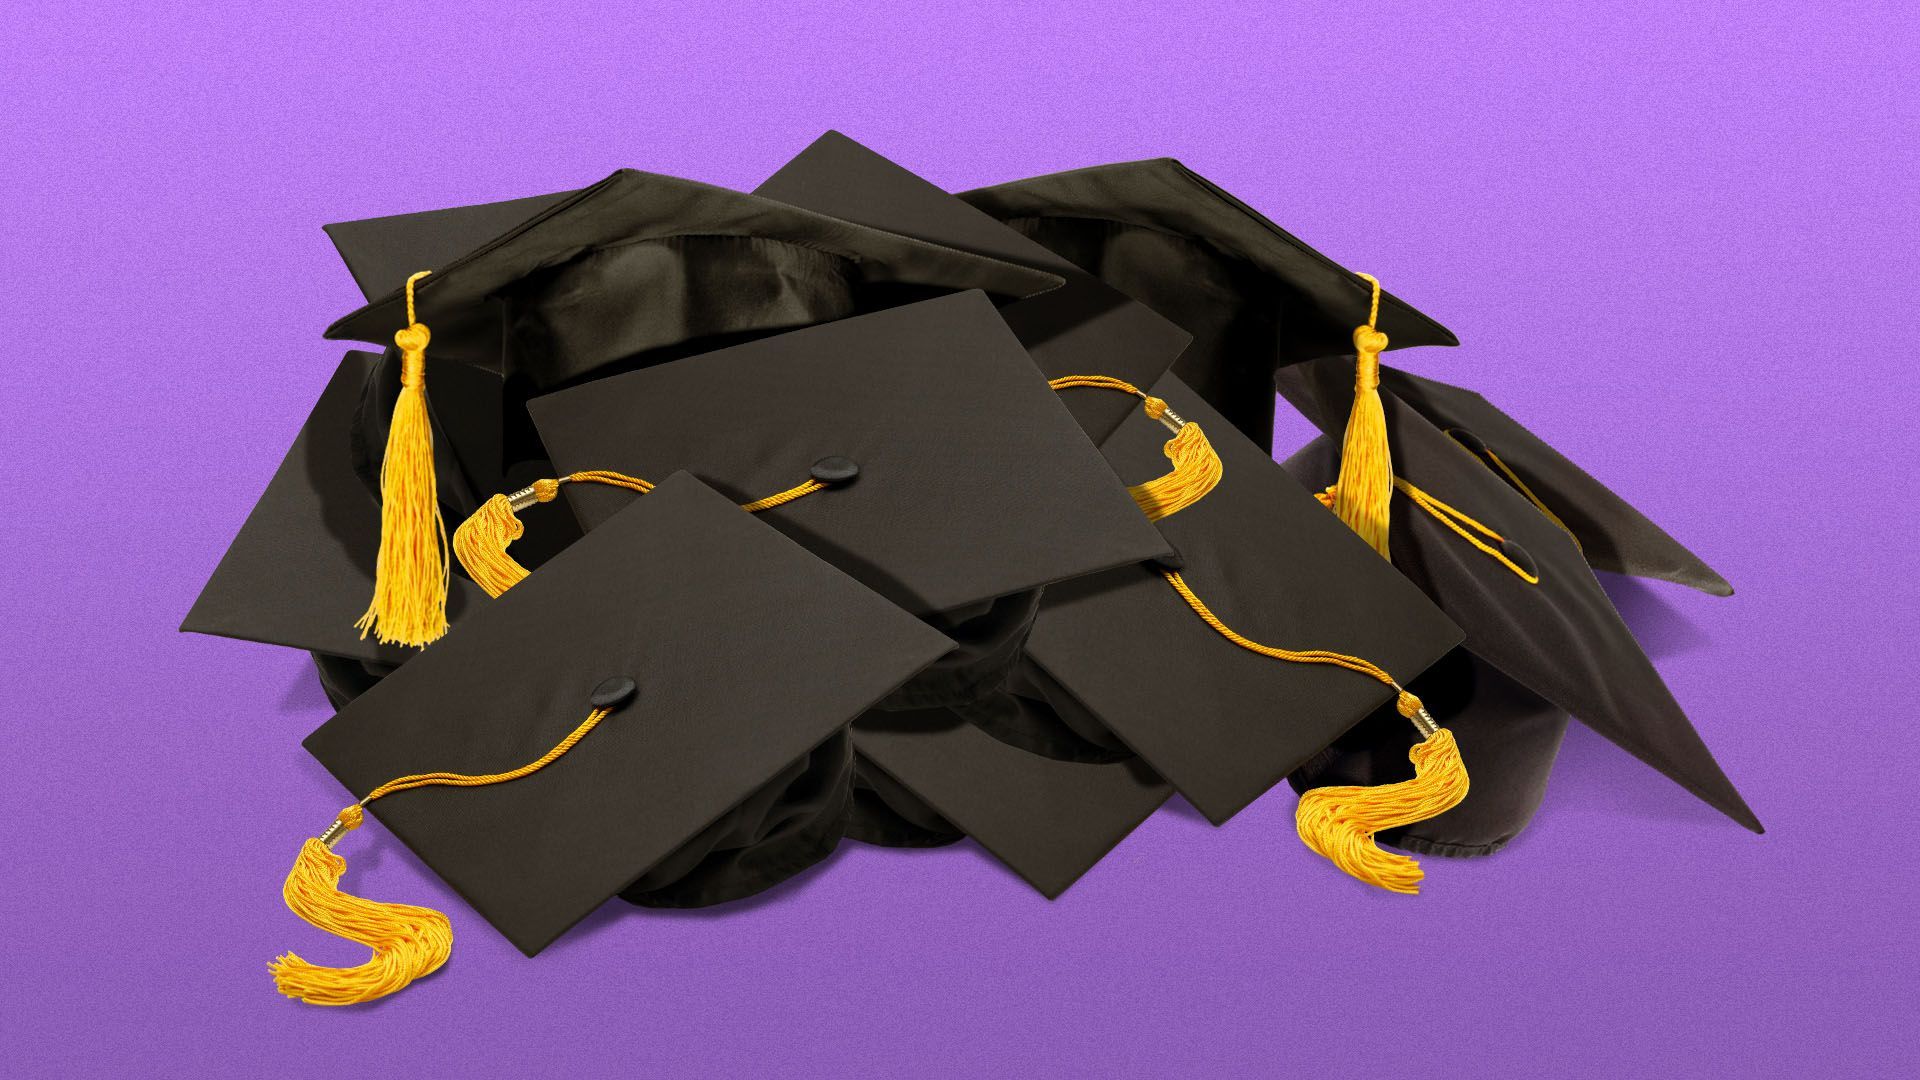 Illustration of a pile of graduation caps